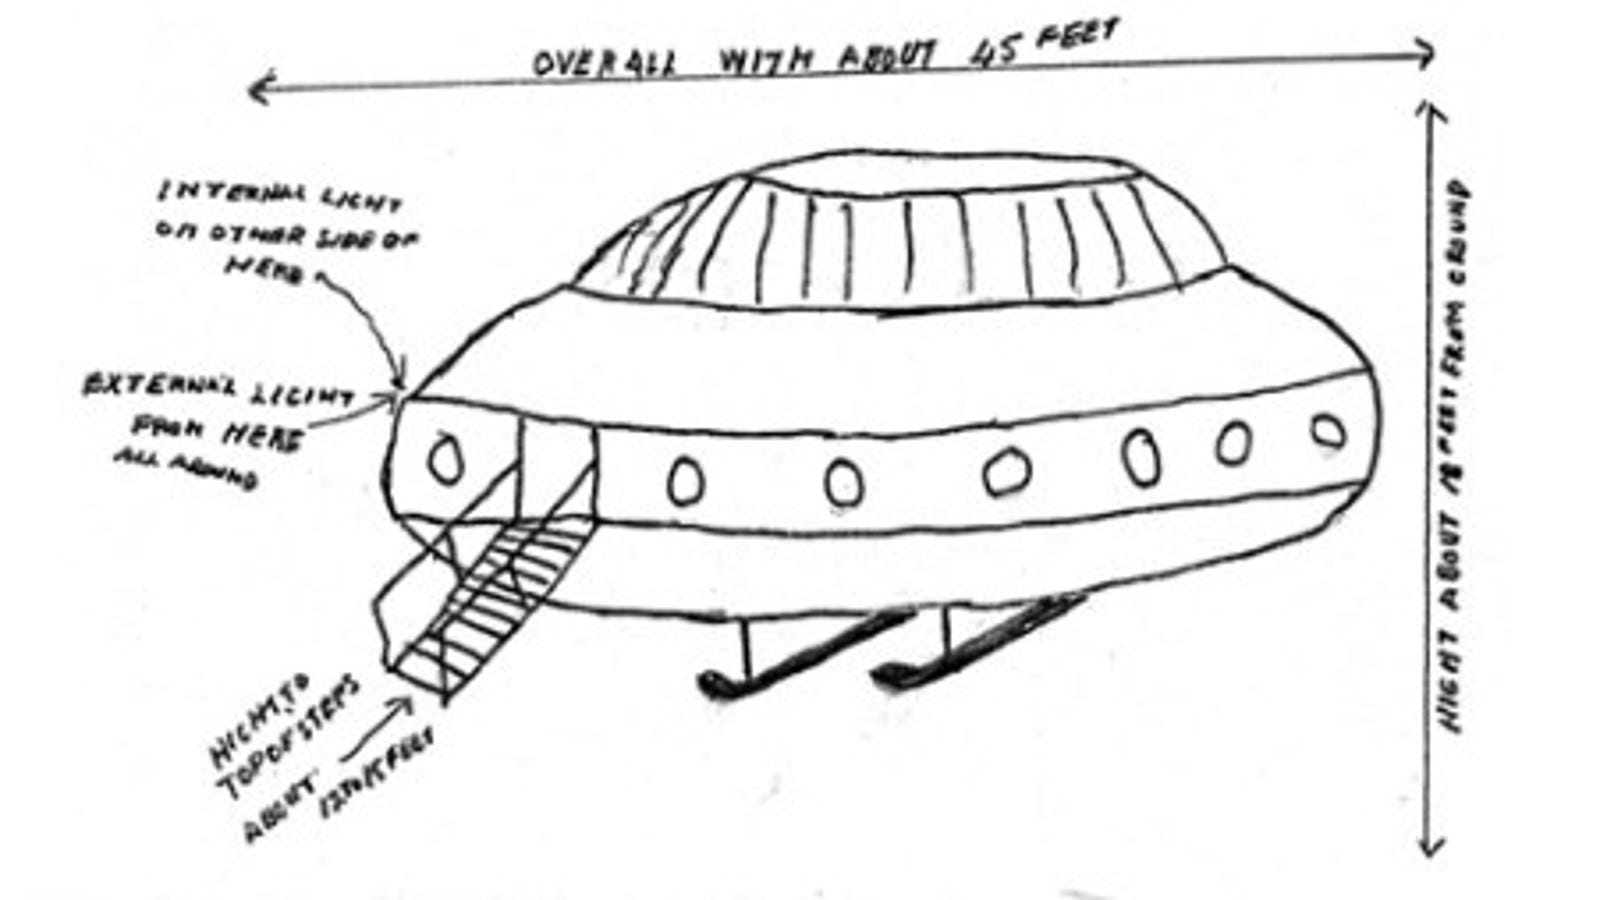 Read England's Secret UFO Documents